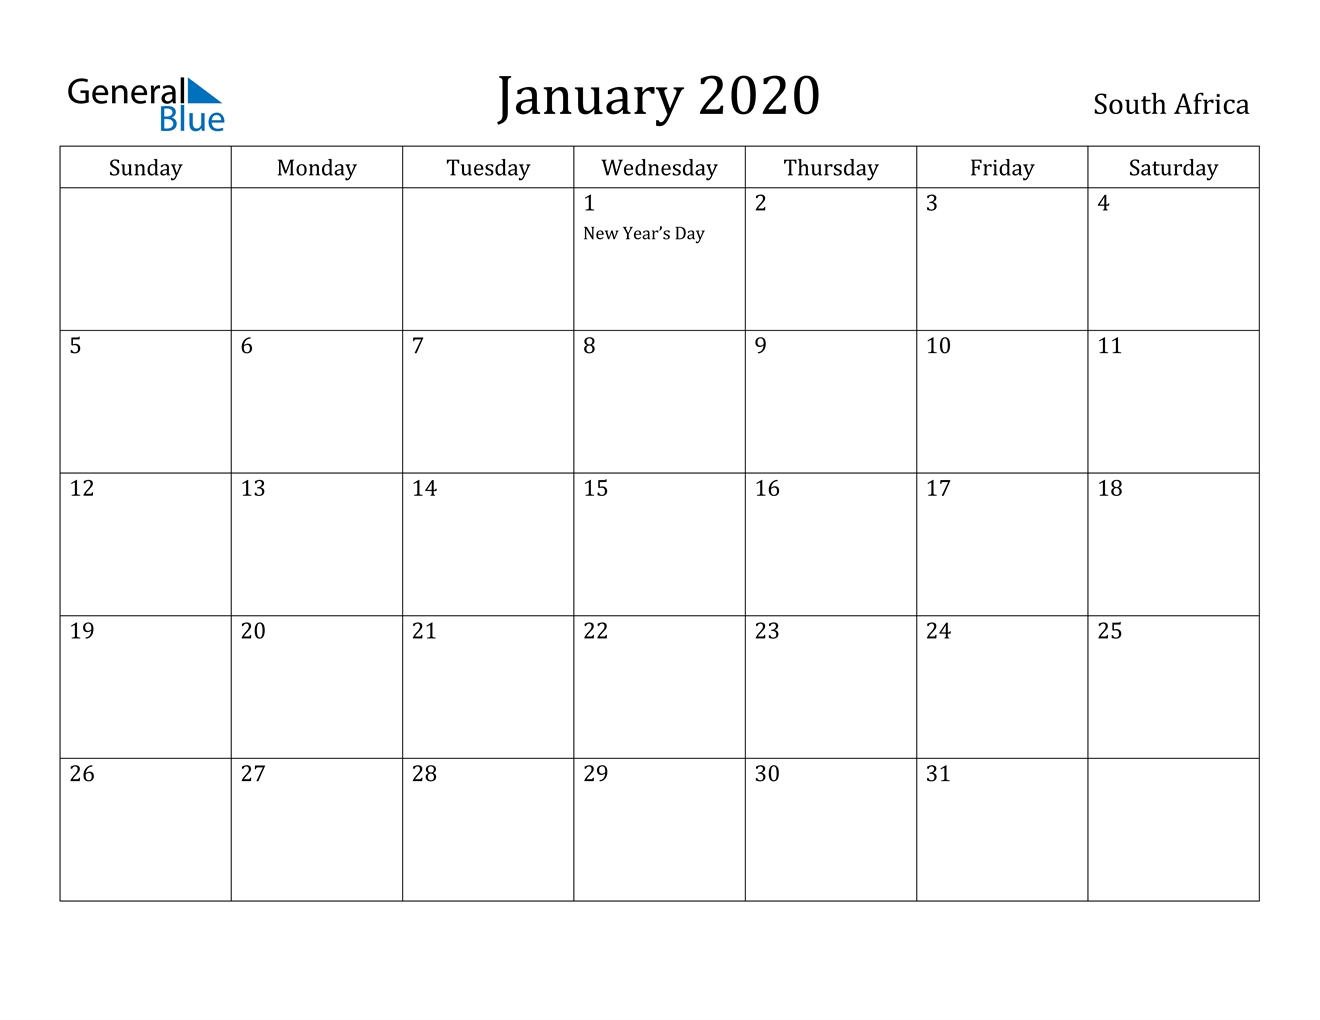 January 2020 Calendar - South Africa-South Africa Holidays 2020